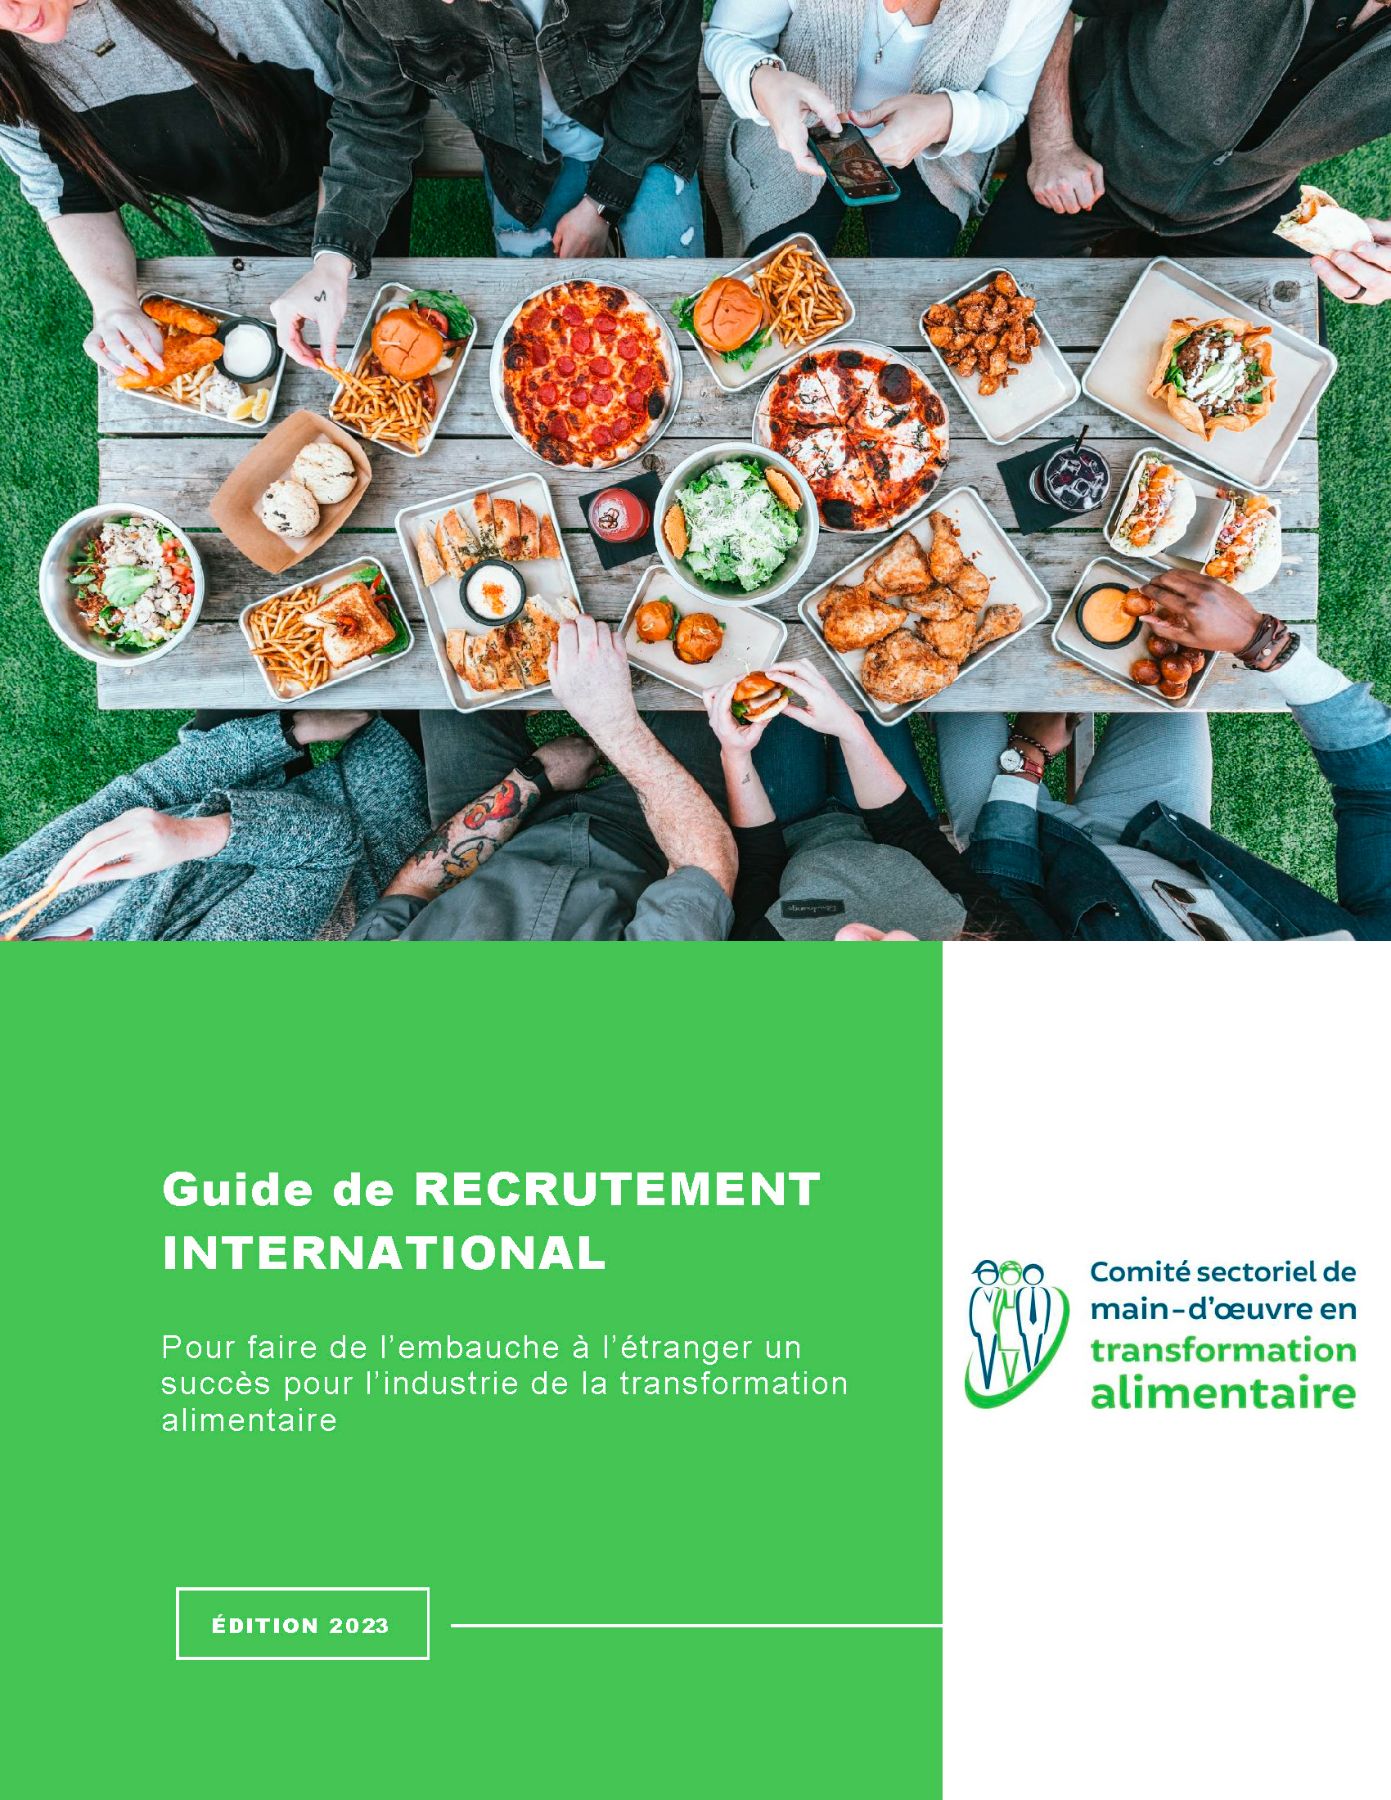 Guide de recrutement international